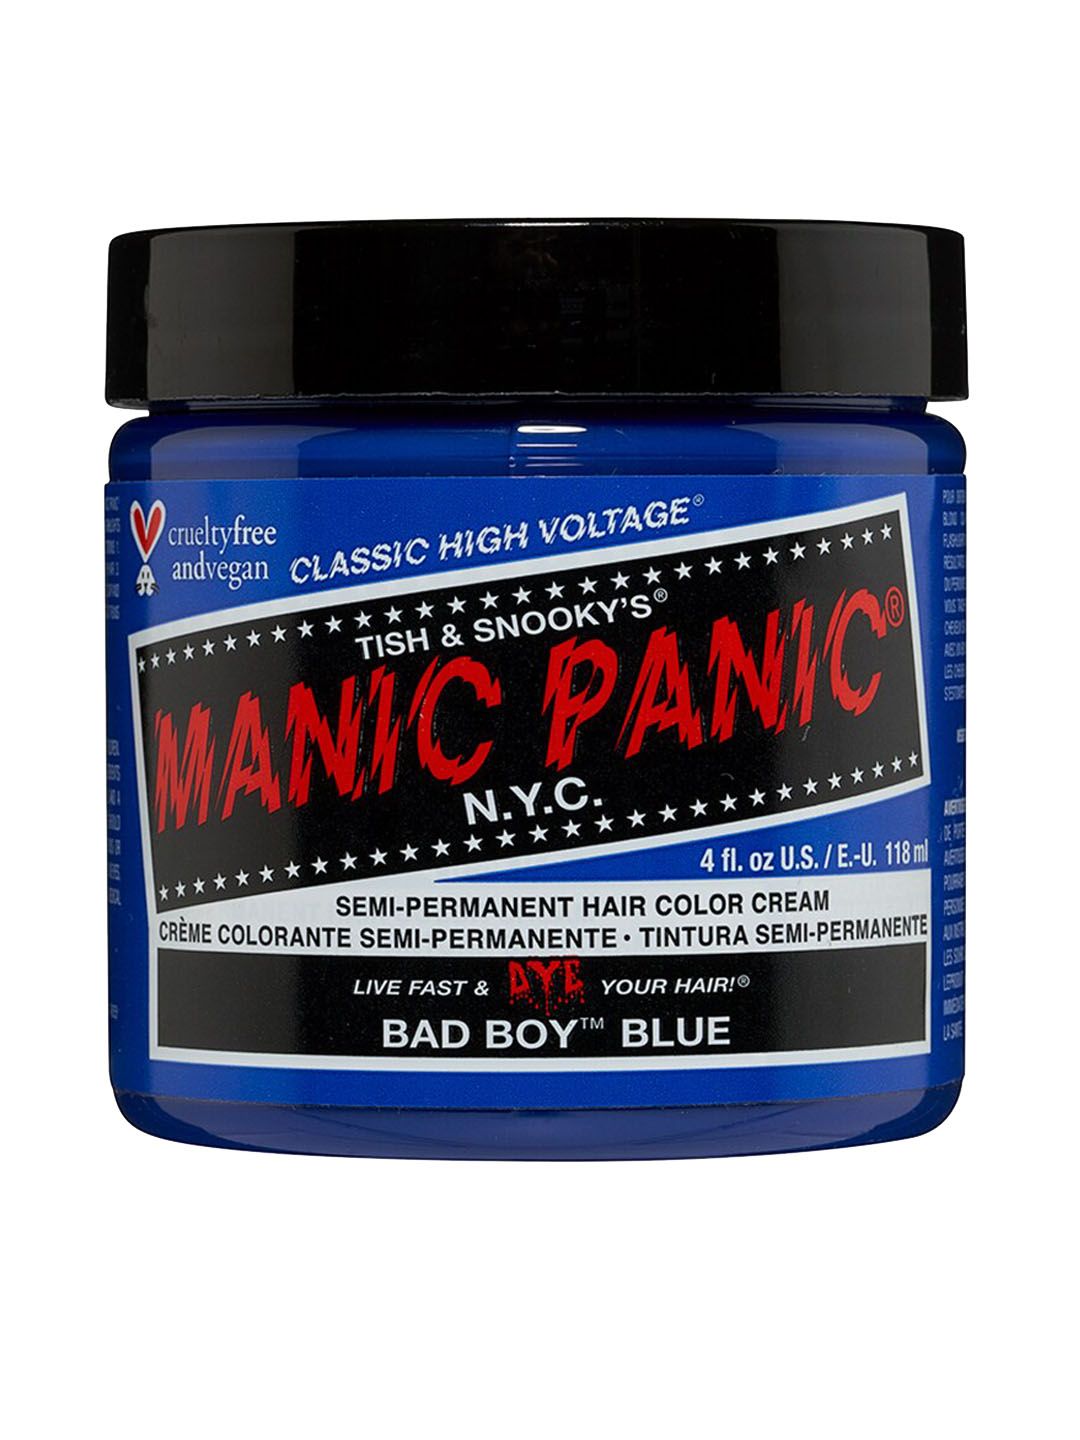 MANIC PANIC Classic High Voltage Semi-Permanent Hair Colour Cream - Bad Boy Blue Price in India